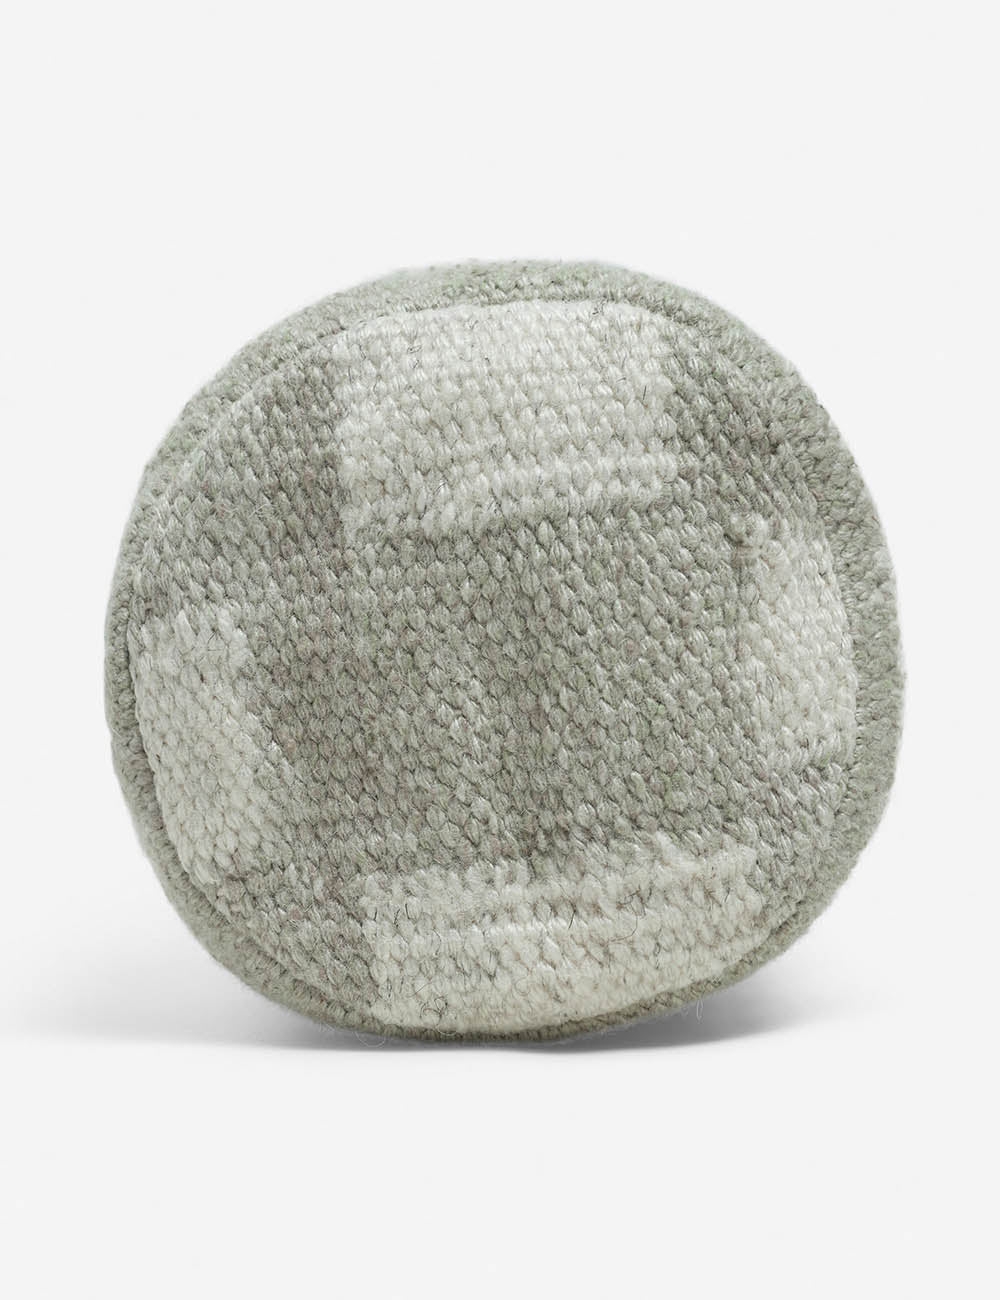 Irregular Checkerboard Bolster Pillow by Sarah Sherman Samuel - Image 5